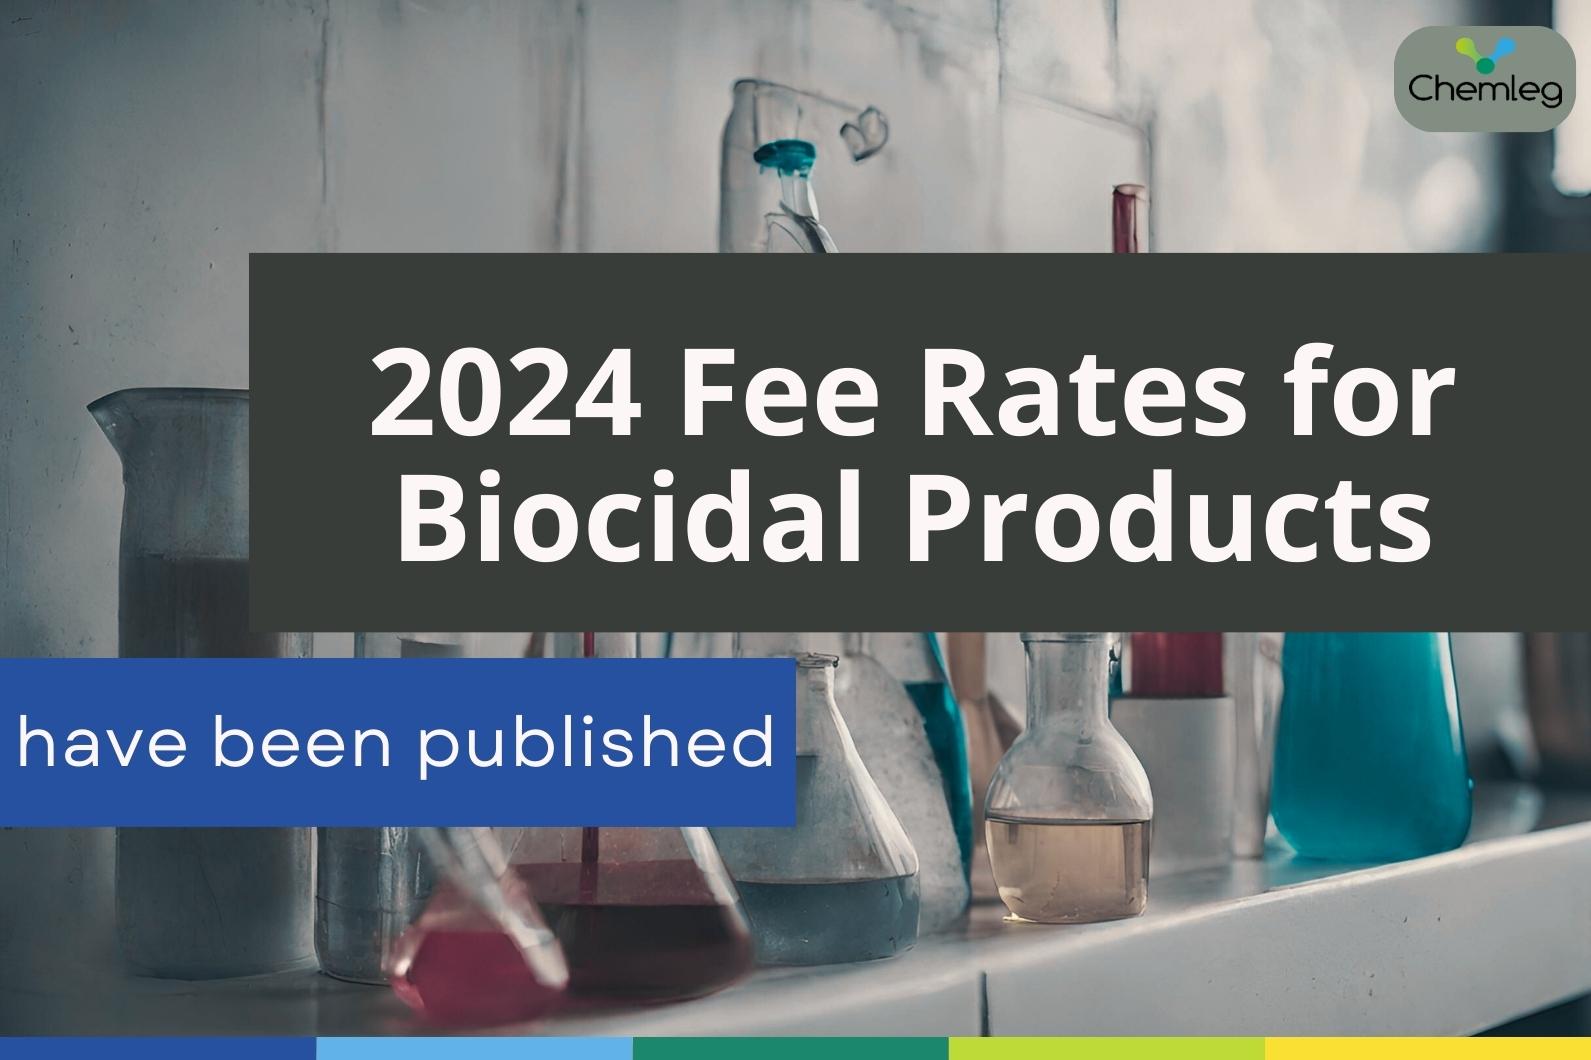 Biocidal Products: 2024 Fee Rates in Turkey